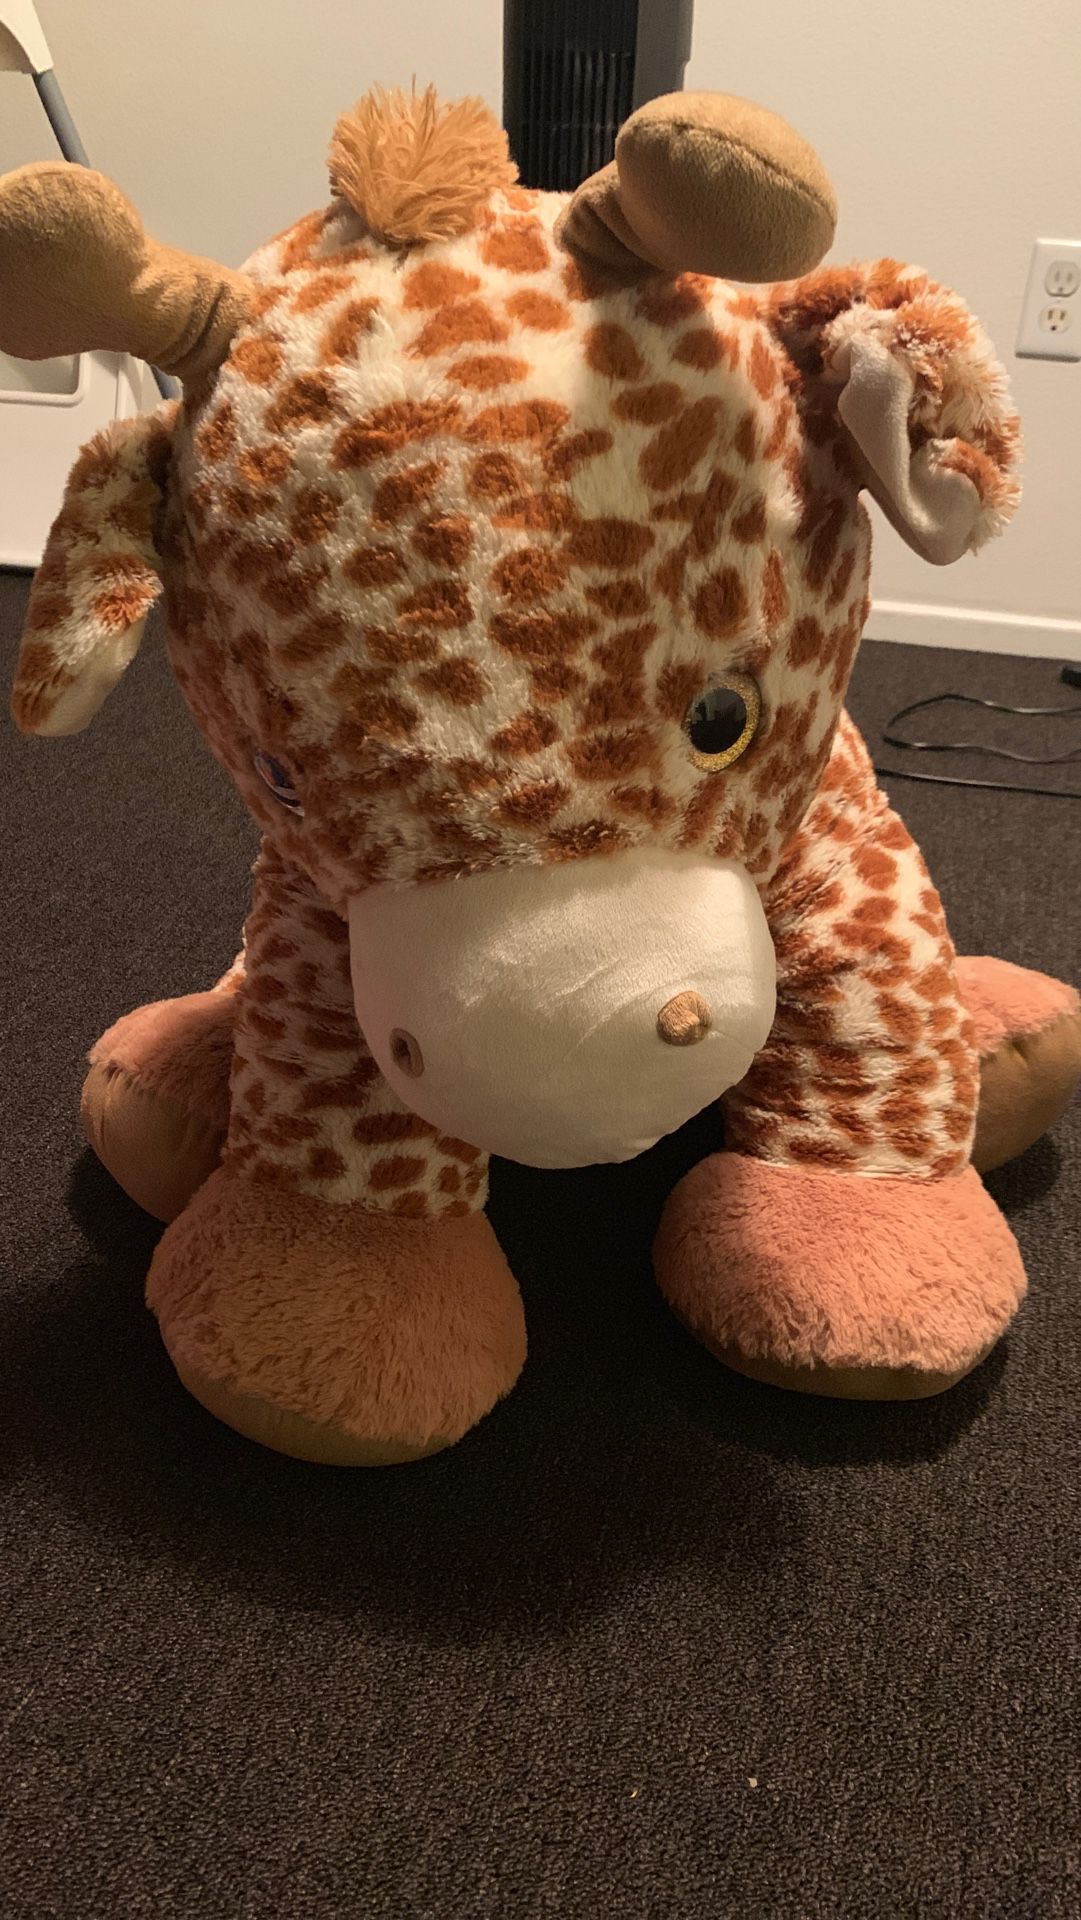 Big giraffe teddy bear